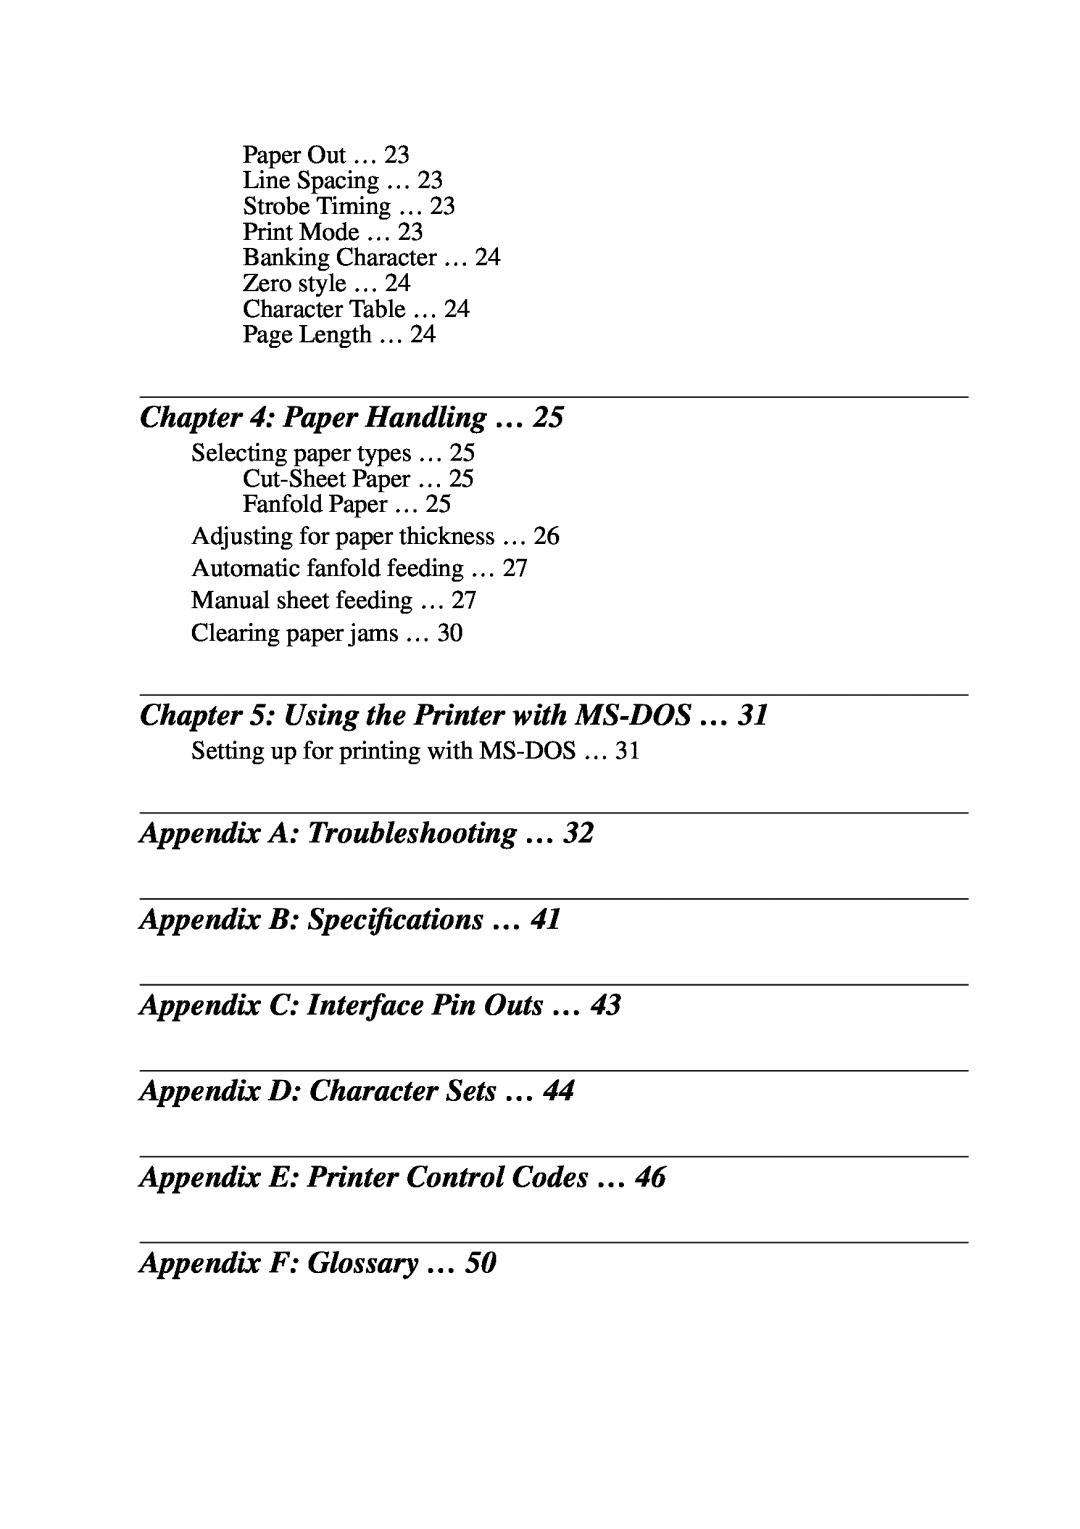 Star Micronics LC-6211 user manual Paper Handling … 